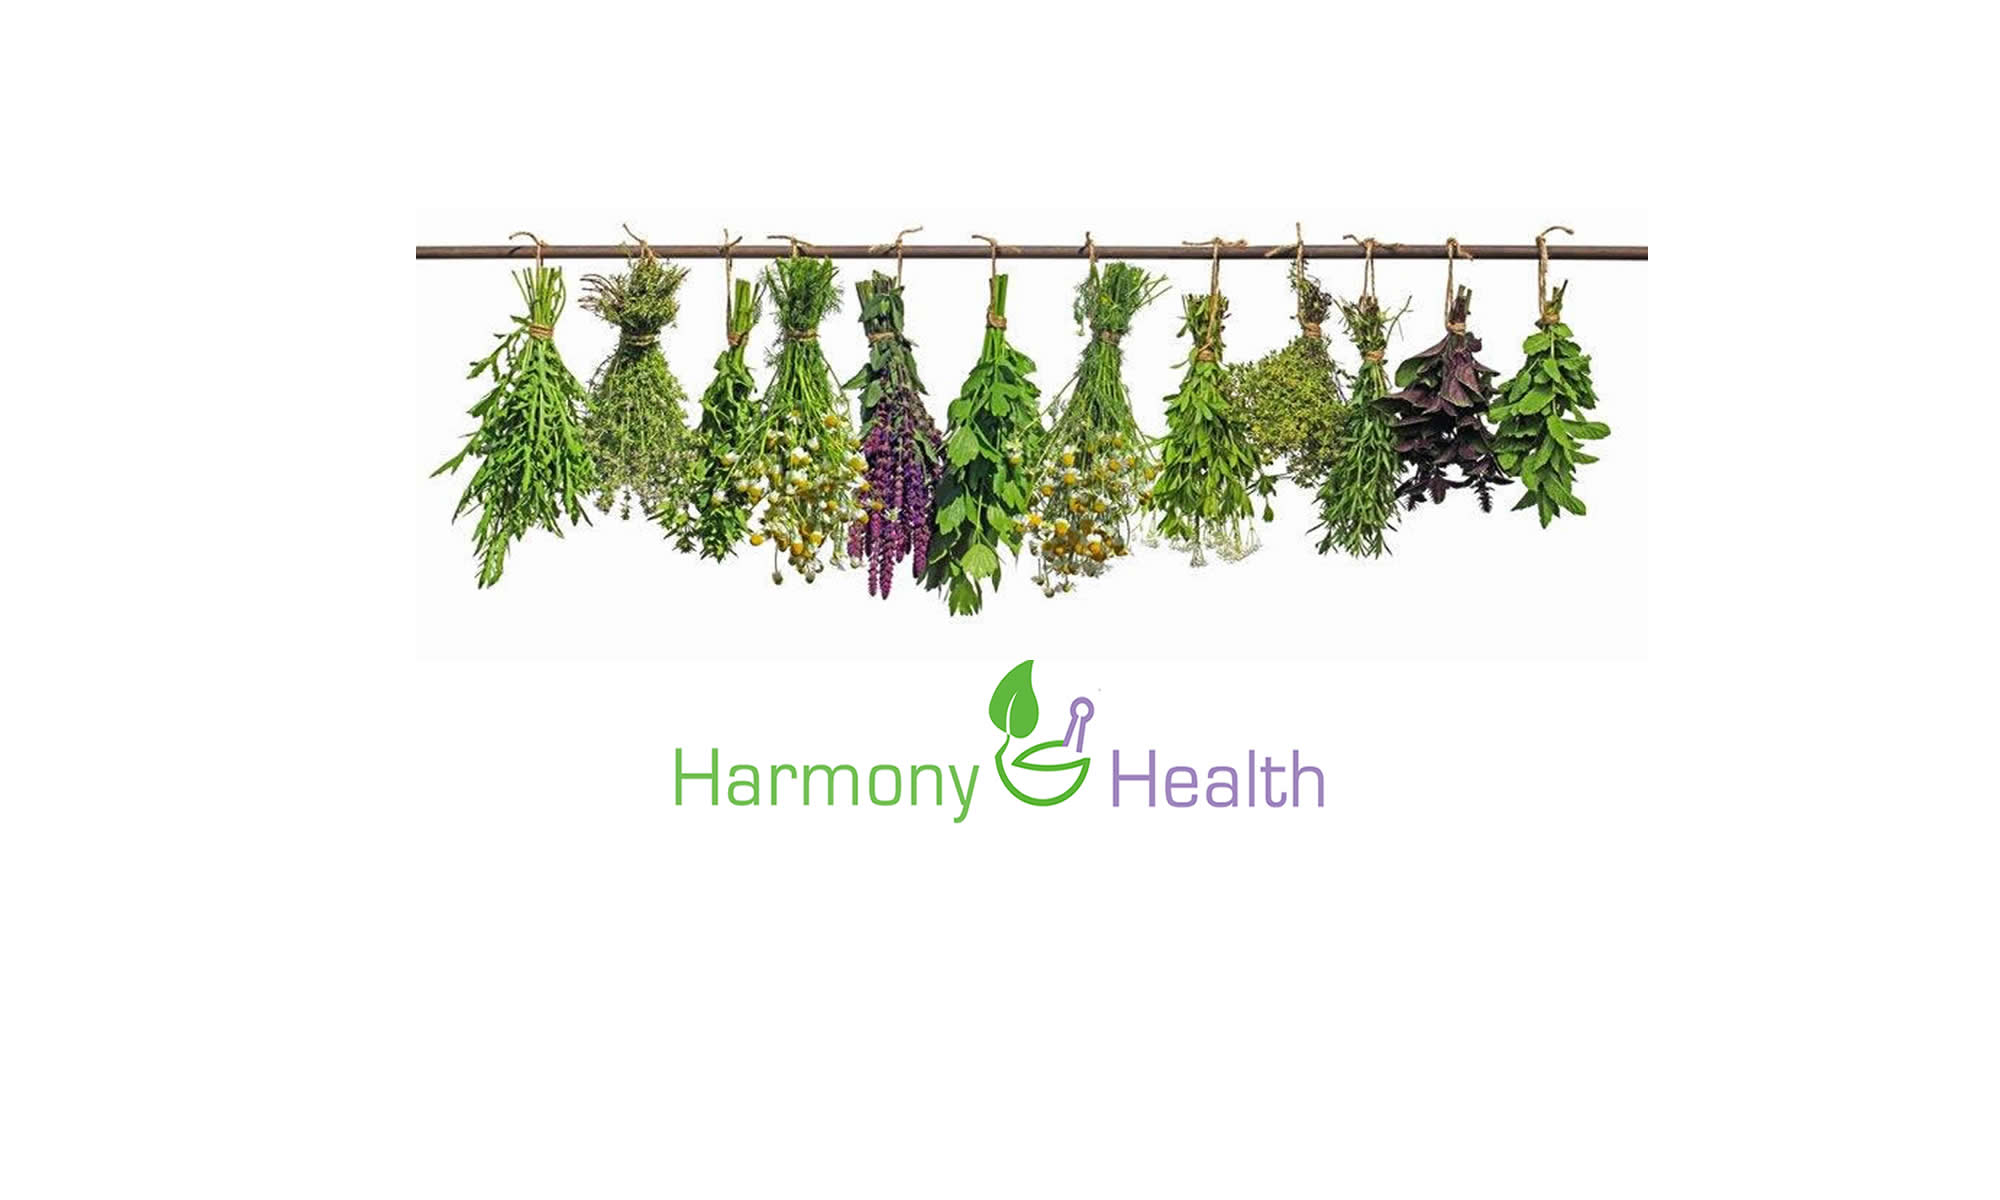 Harmony and Health - A Natural Health & Wellness Center